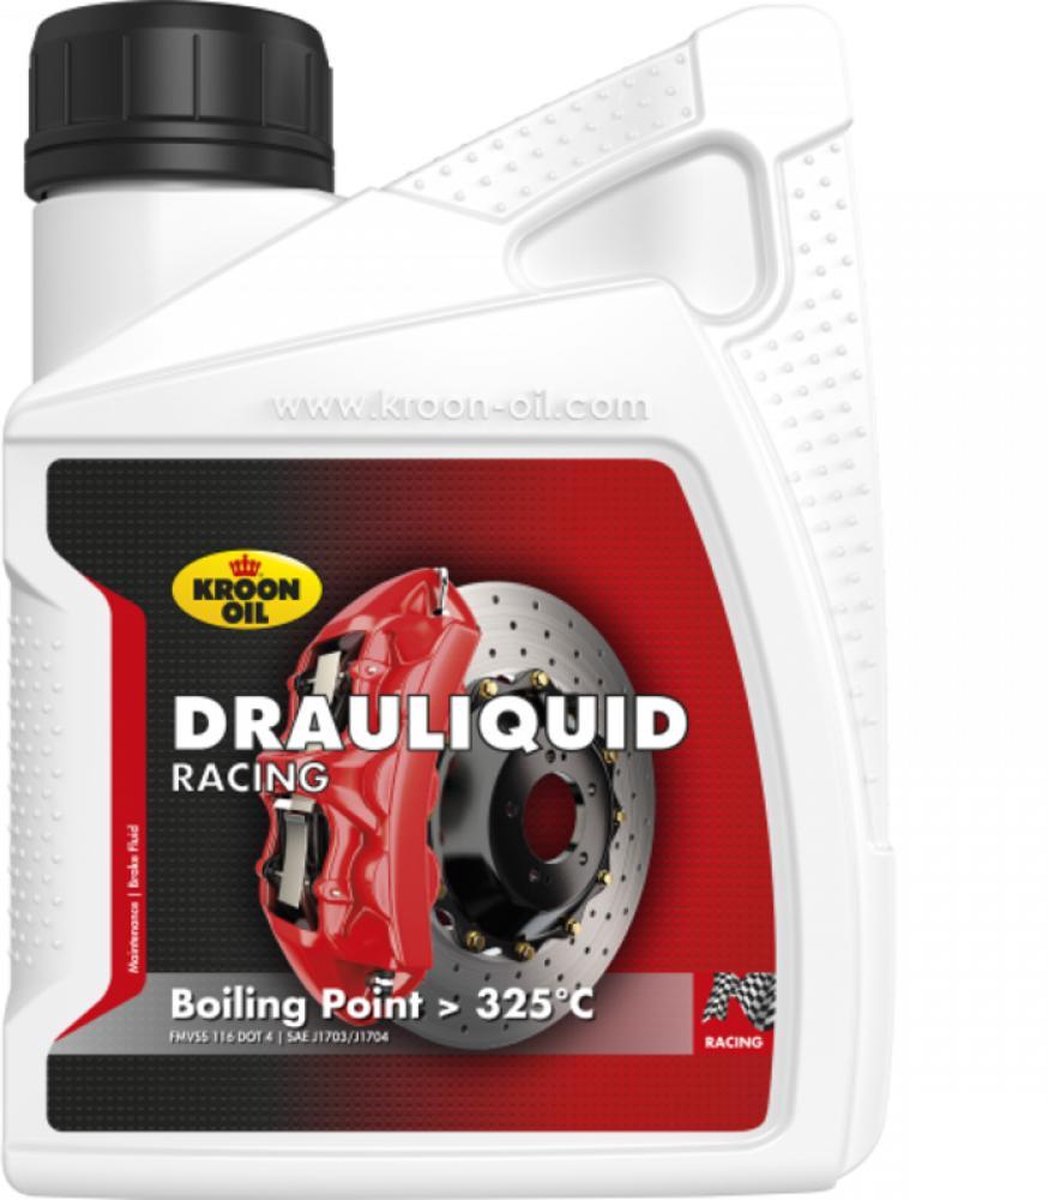 DOT 4 Brake Fluid productinformatie. - Putoline